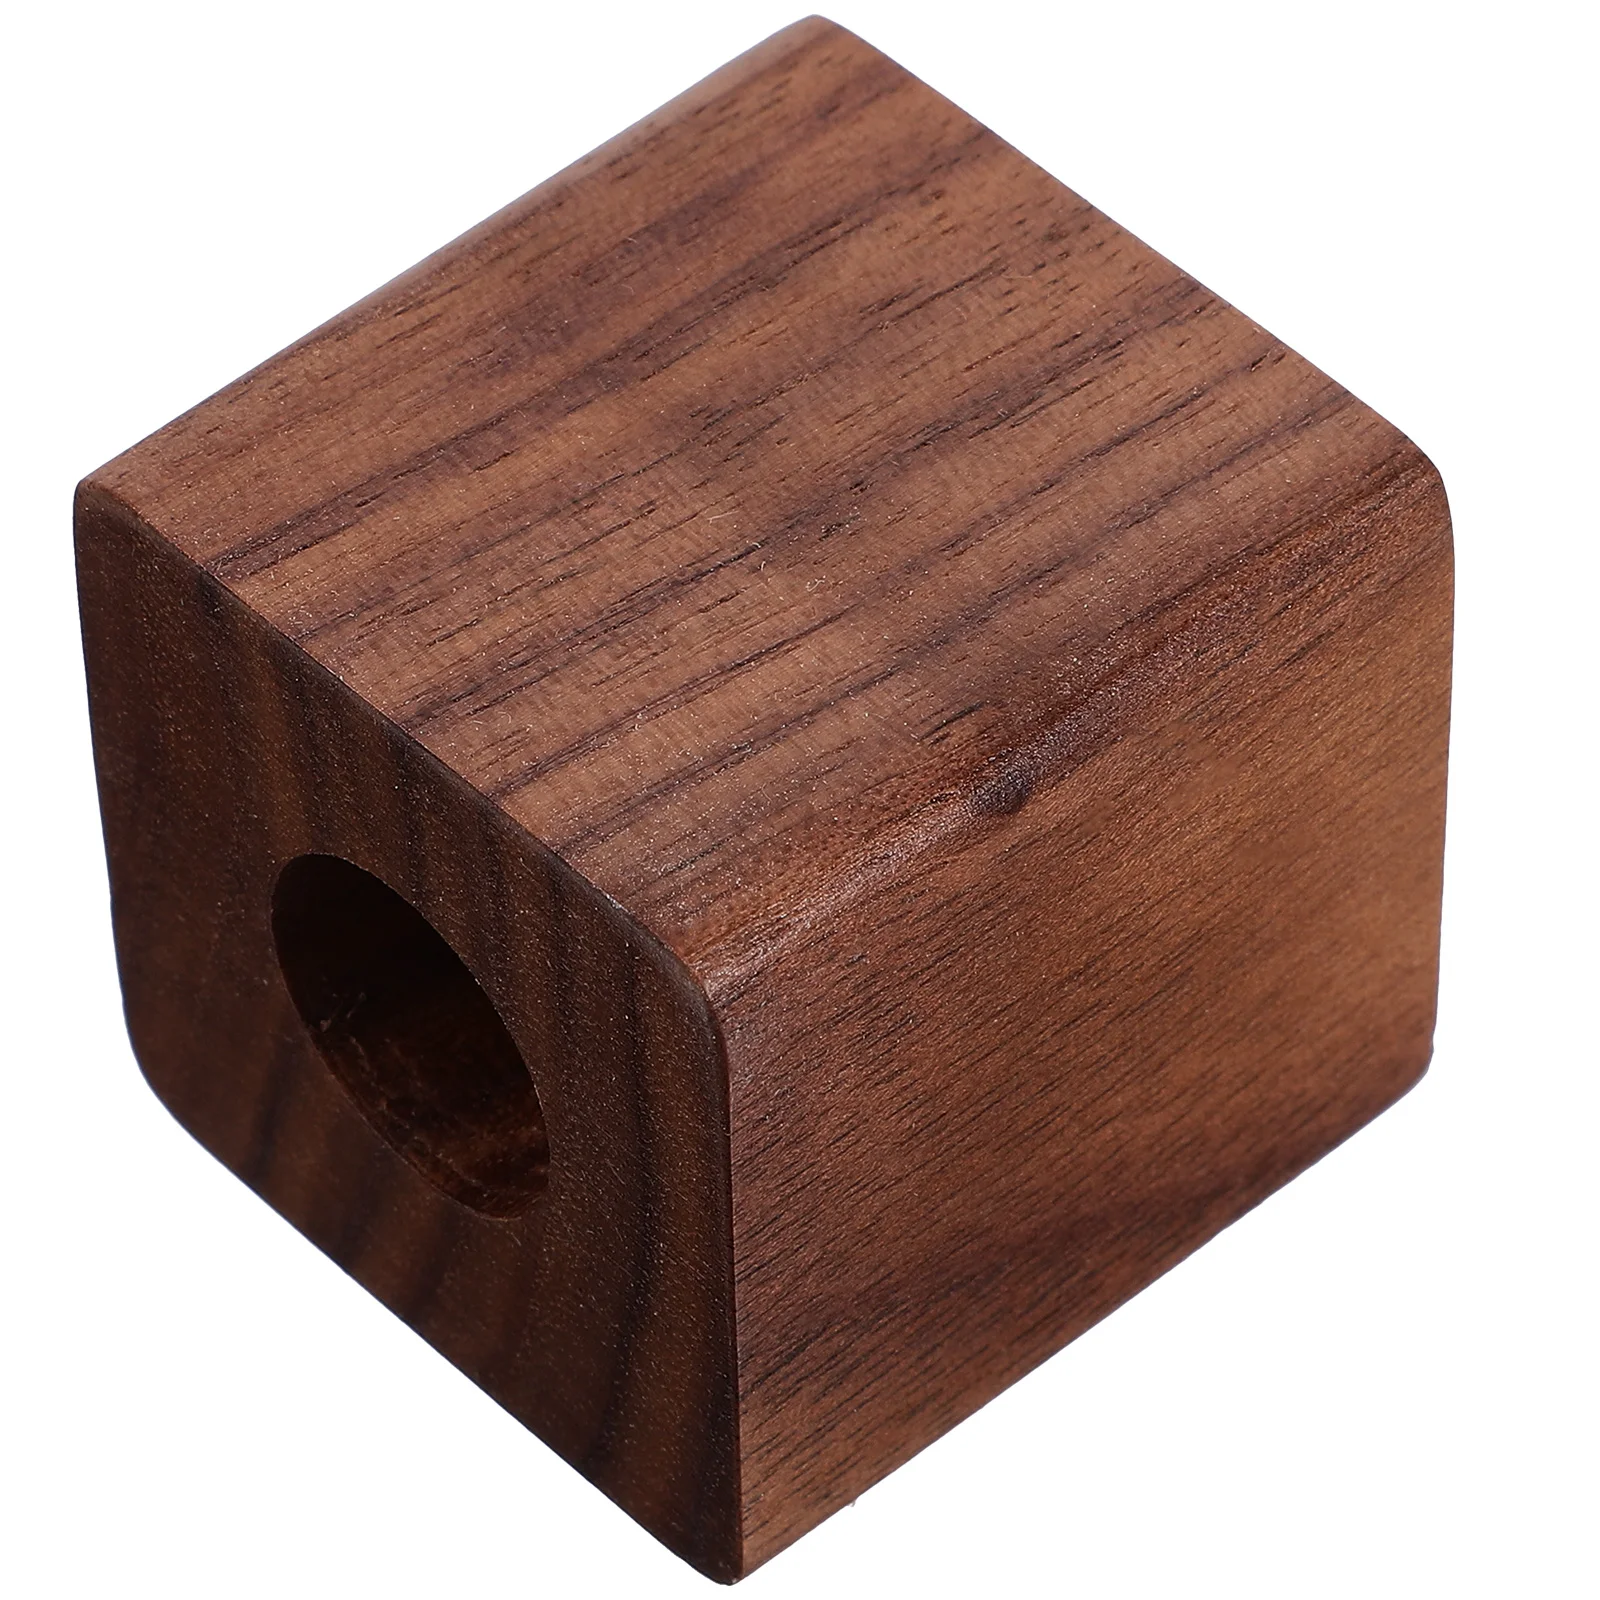 

Wooden Signature Pen Holder Cube Single Hole Pen Rest Stand Pen Storage Holder